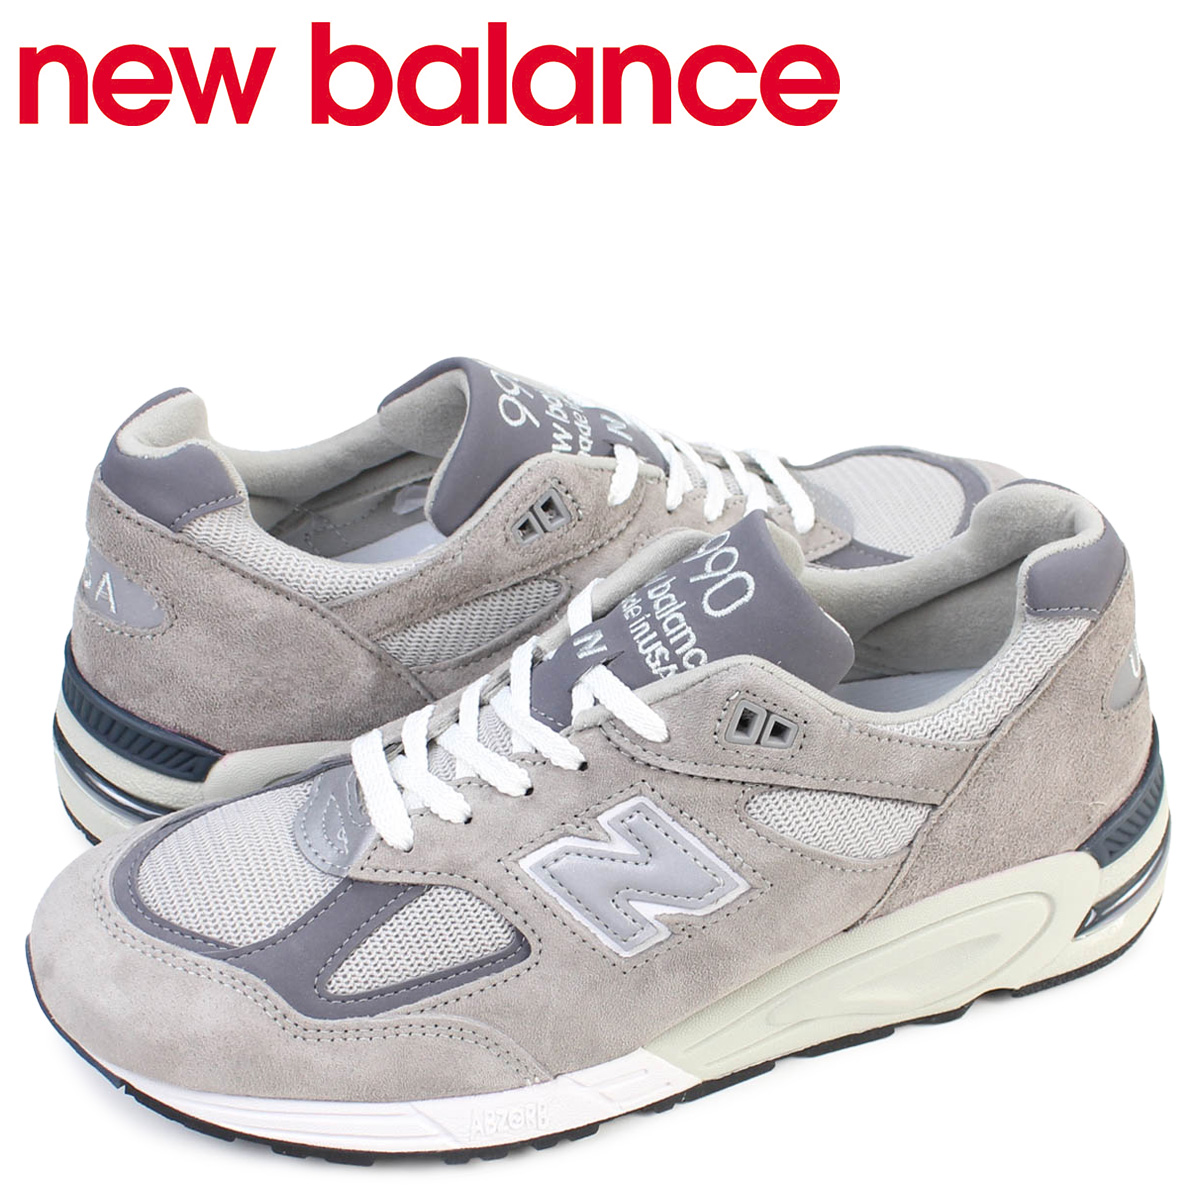 new balance 990 on sale